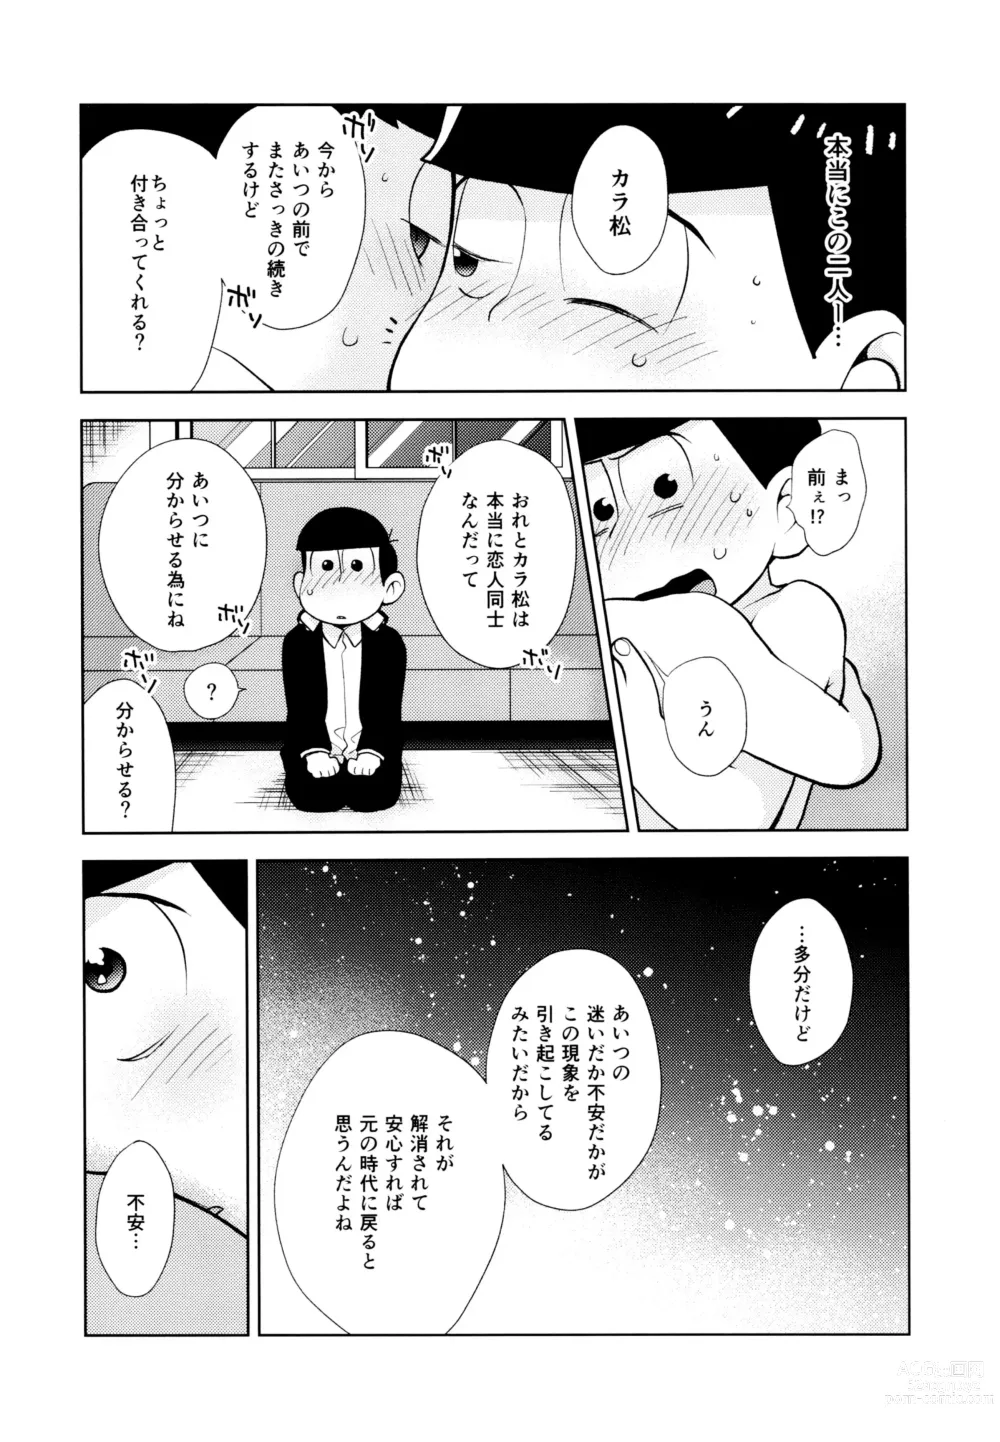 Page 16 of doujinshi Chotto Abunai Time Slip